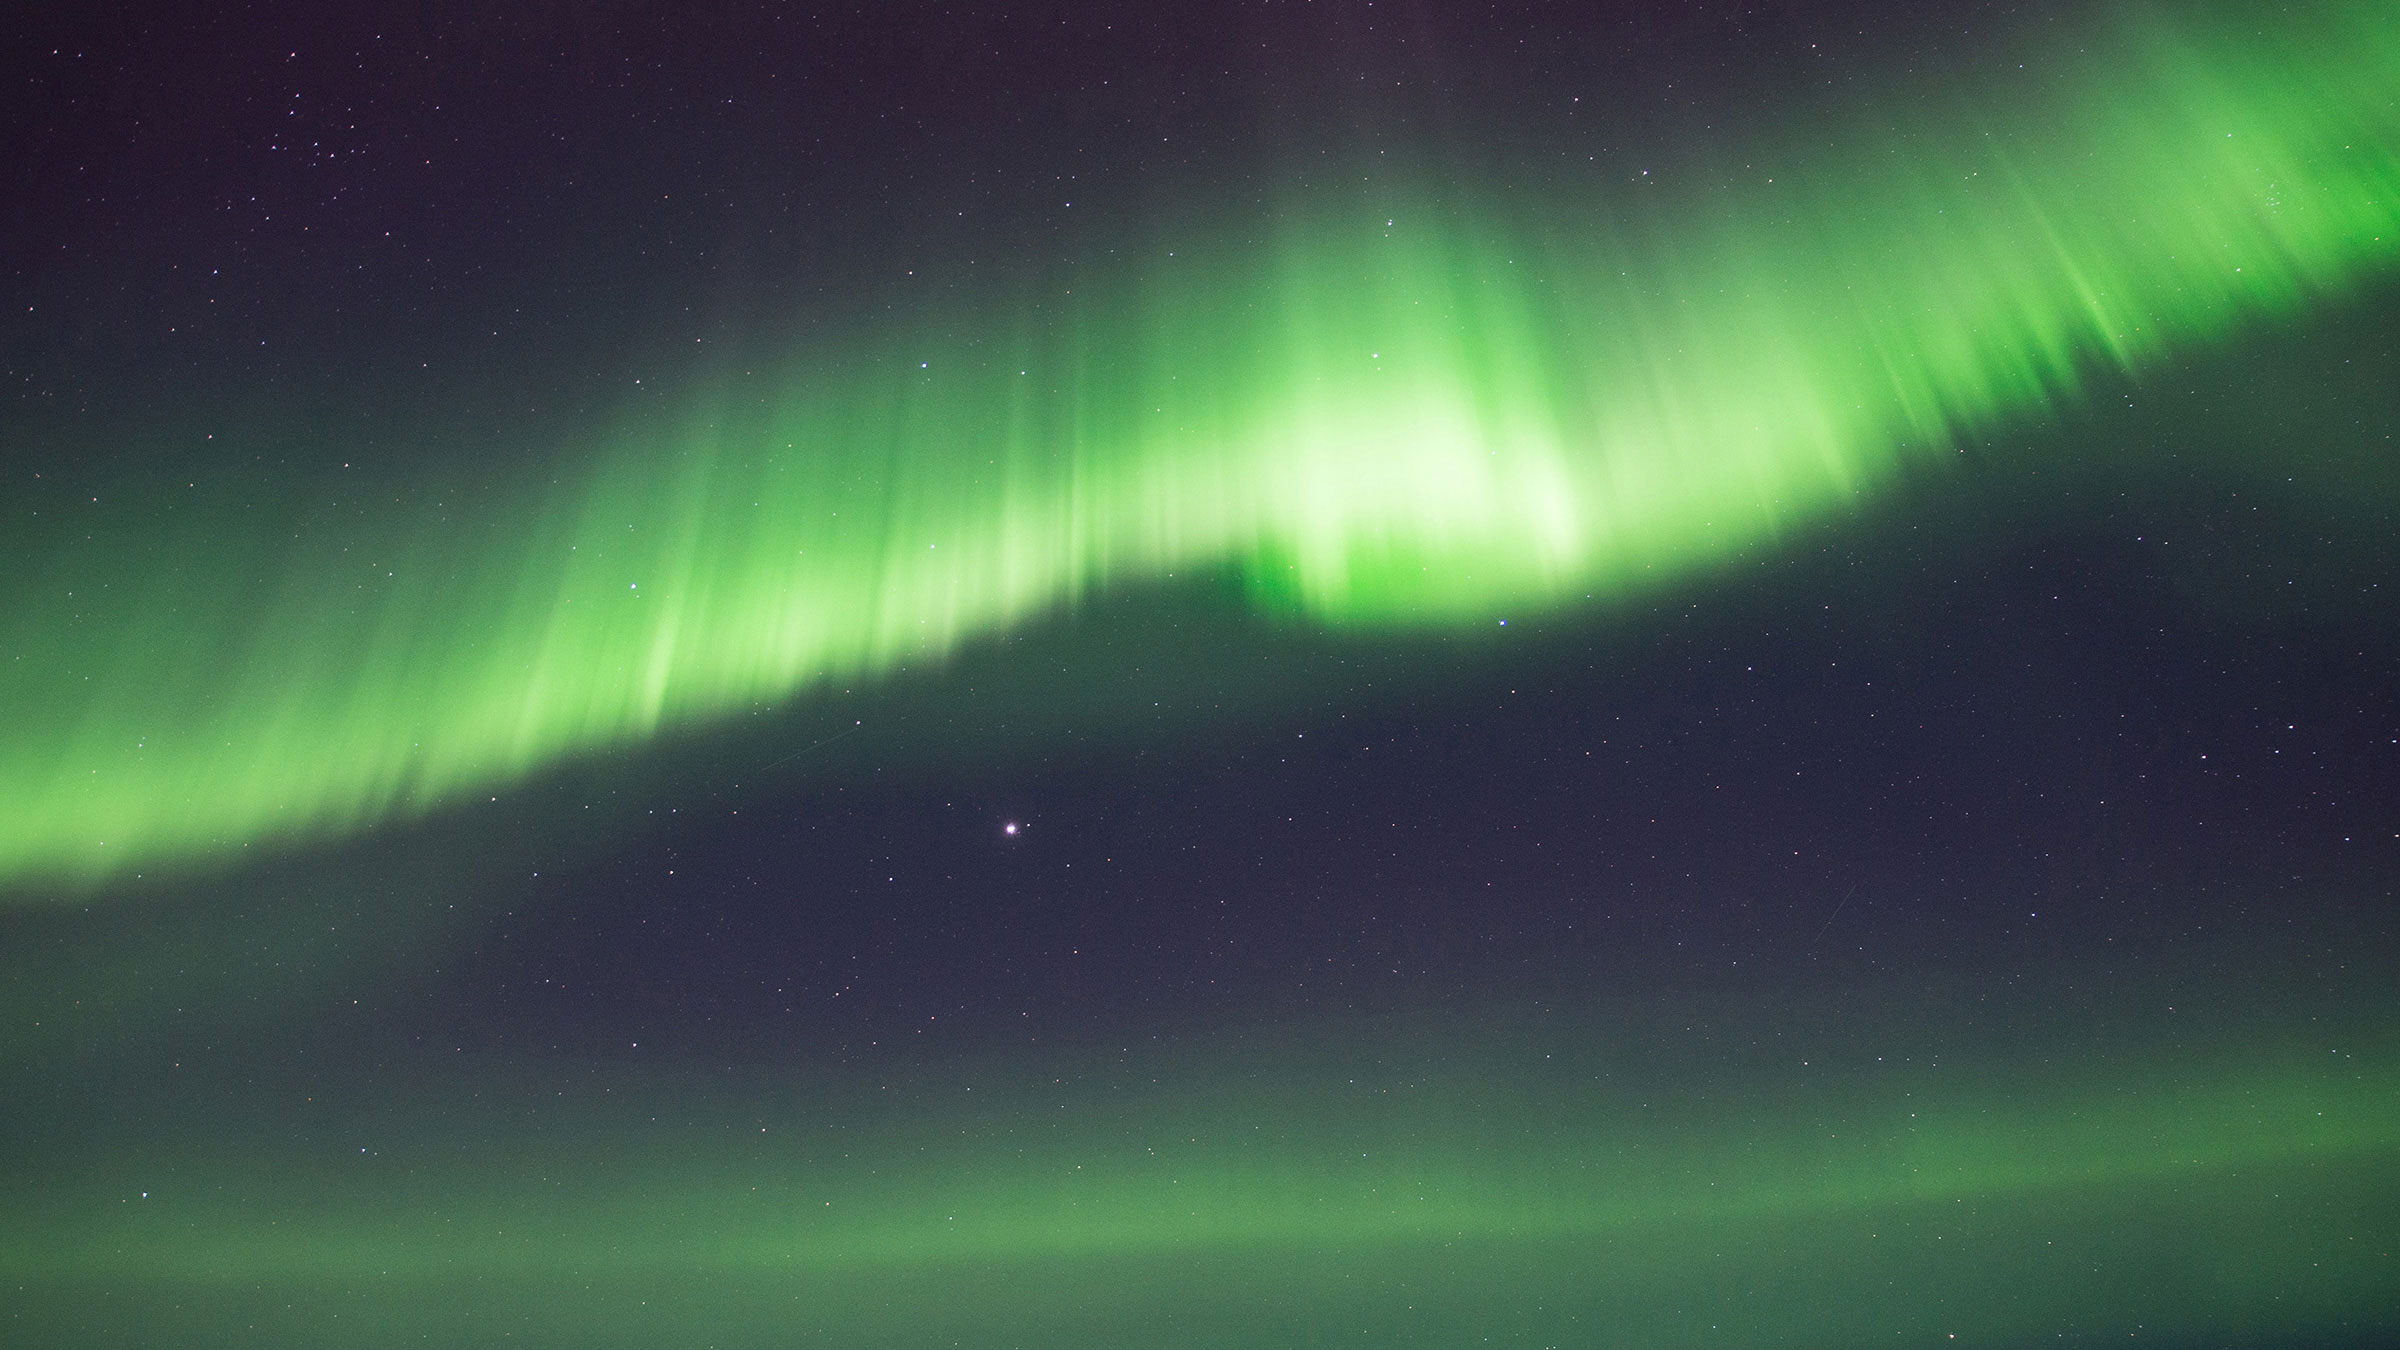 https://tayeblog.net/images/yootheme/science-post-chasing-aurora-borealis-video-poster.jpg